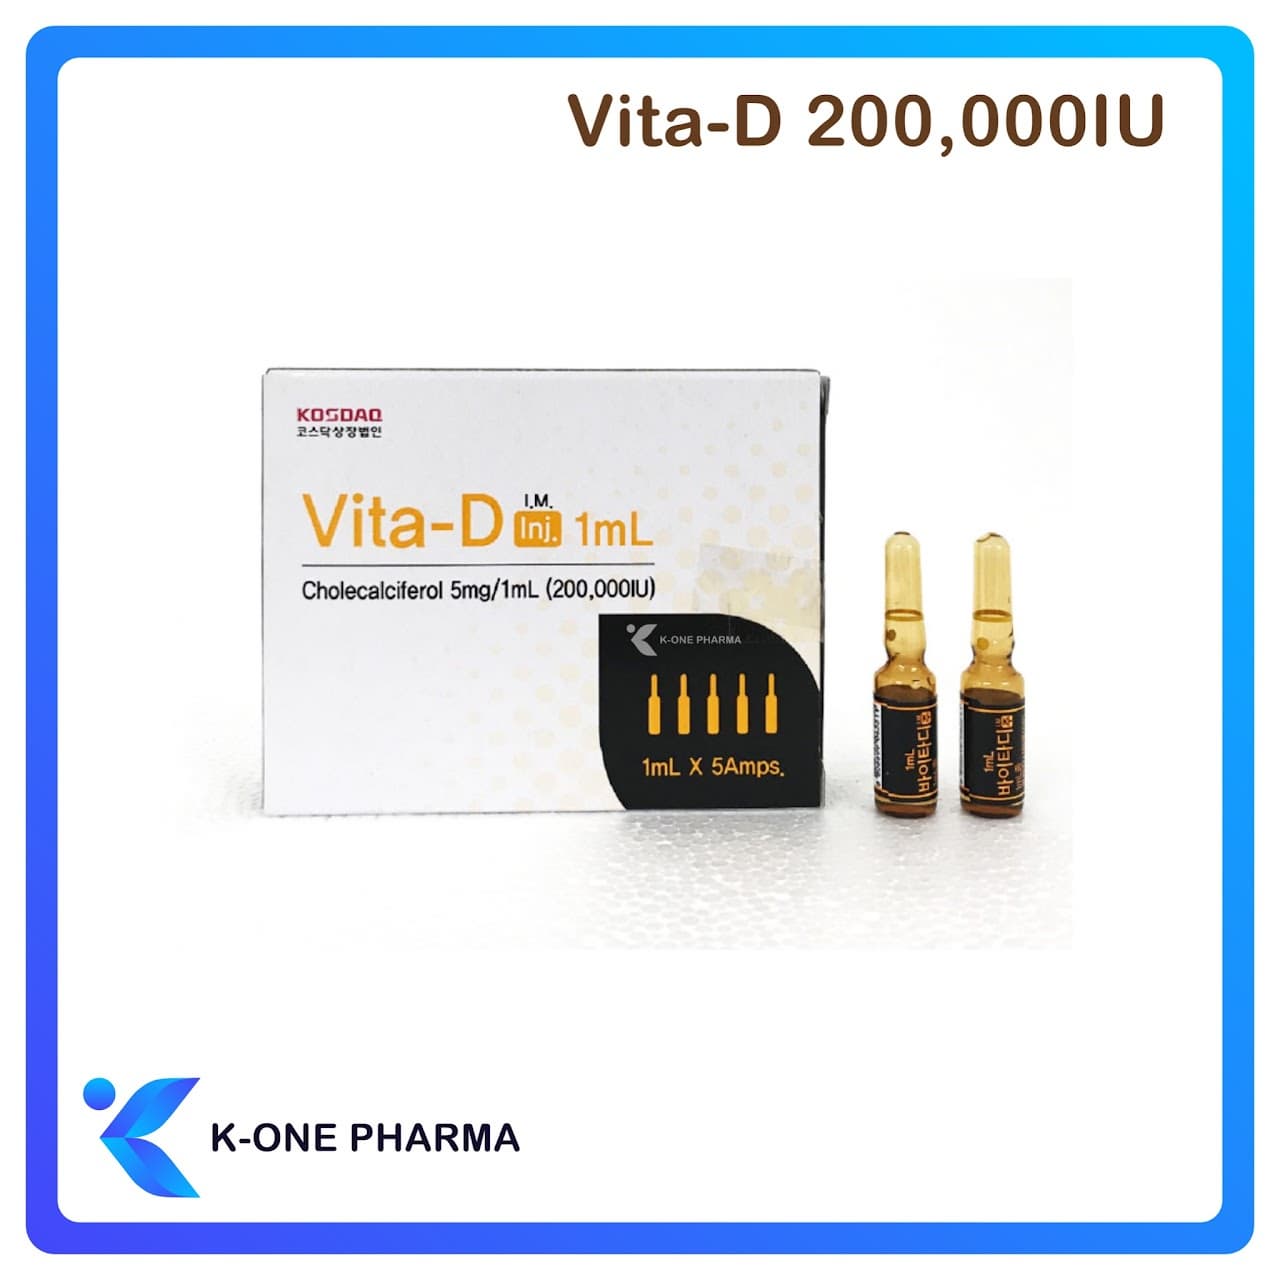 VITAMIN D 200_000IU INJECTION Vitamin Boosting Revitalizing Hydrating Skin